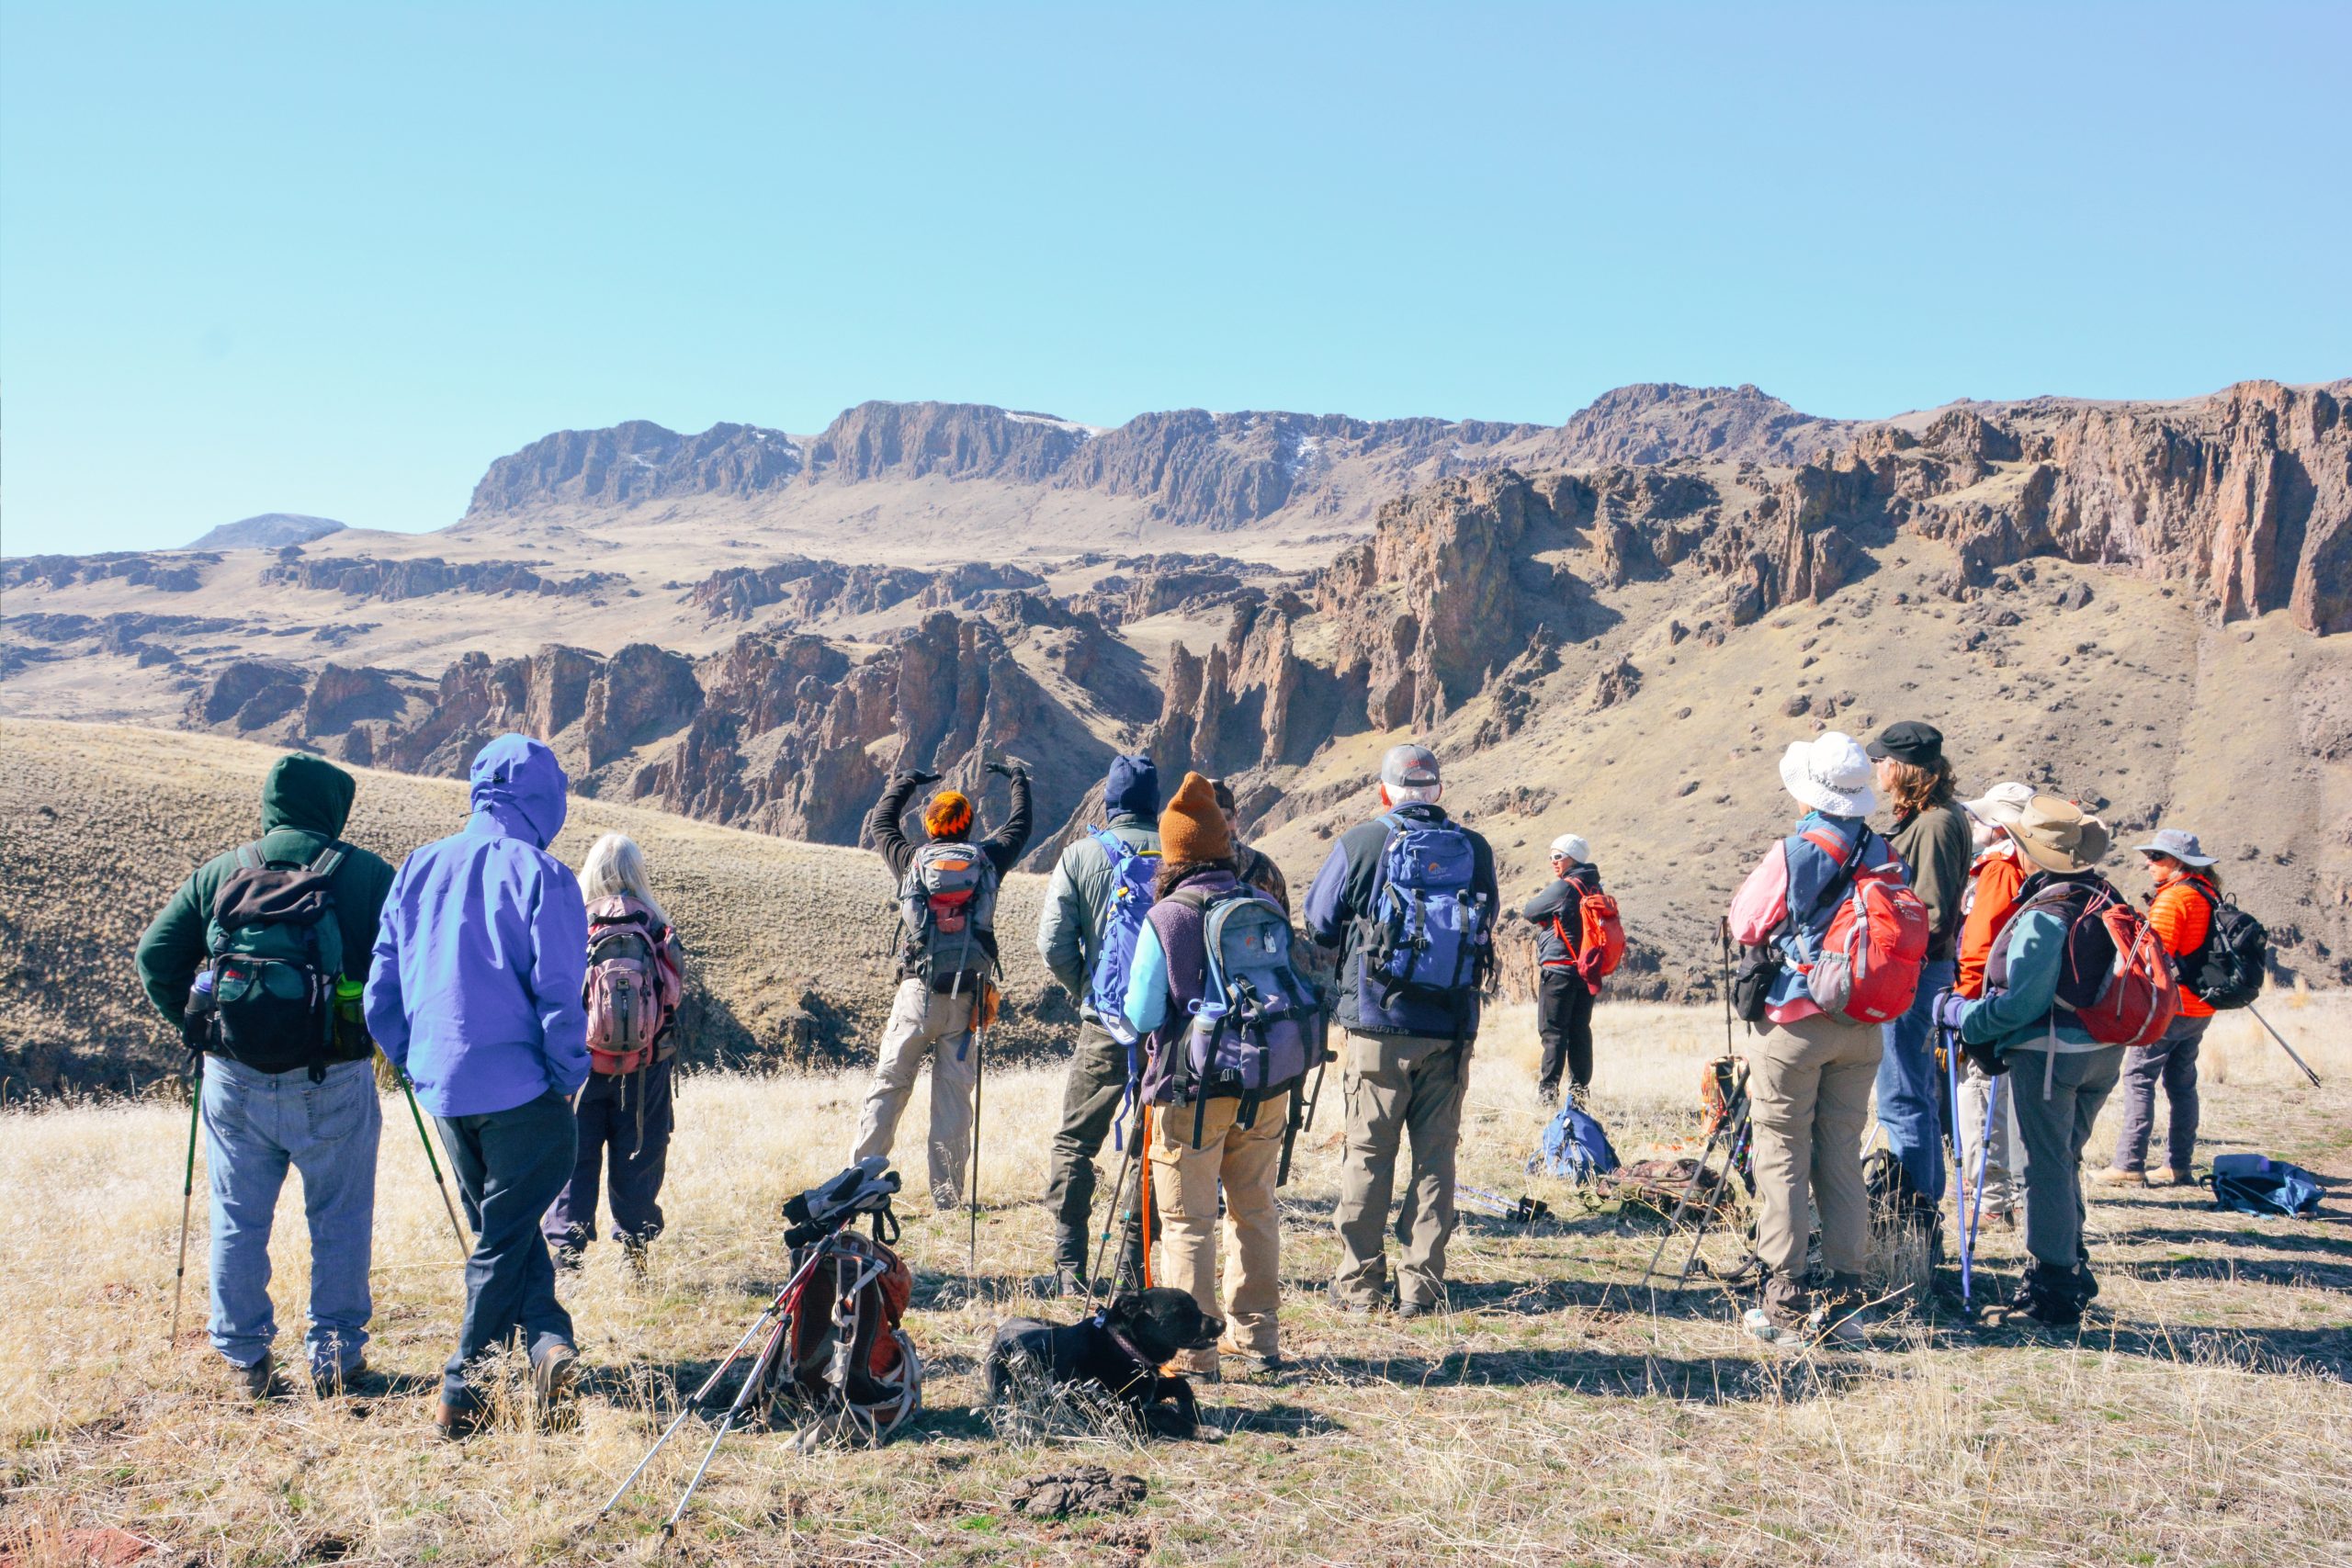 15 people in hiking gear overlooking mountain range